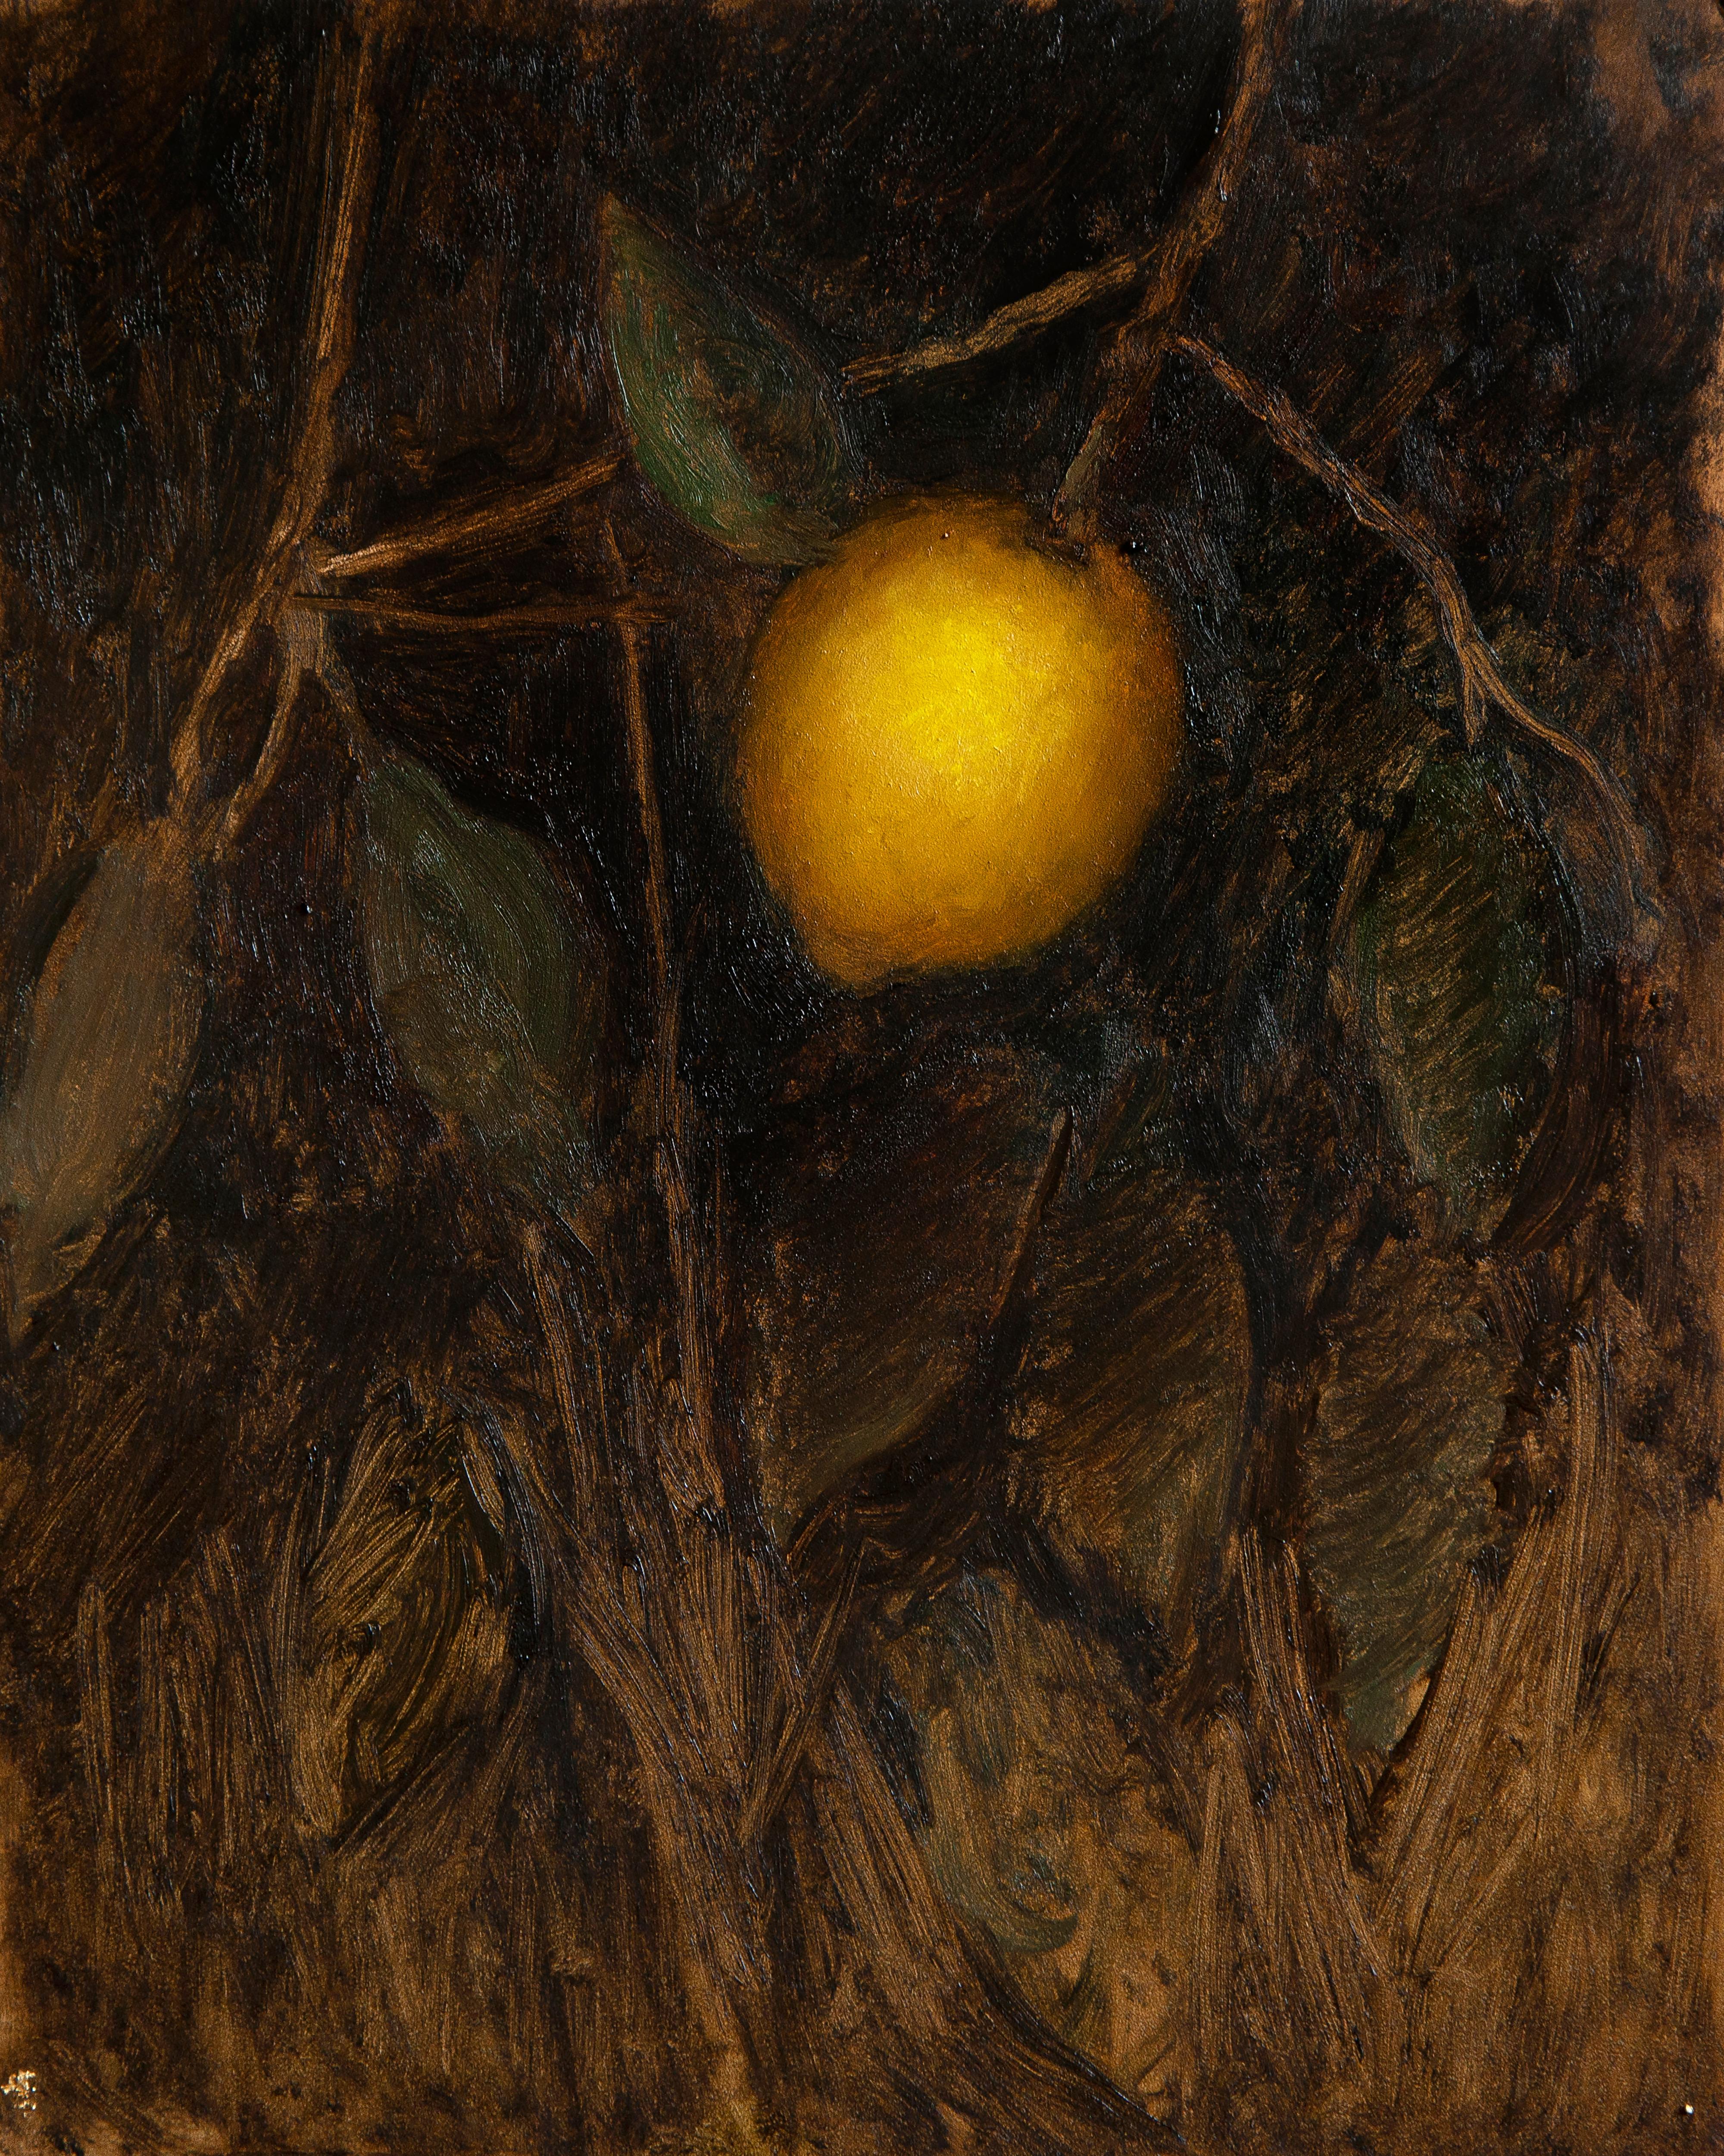 James Zamora Portrait Painting - Lemon Tree Study - original still life study portrait contemporary realism oil